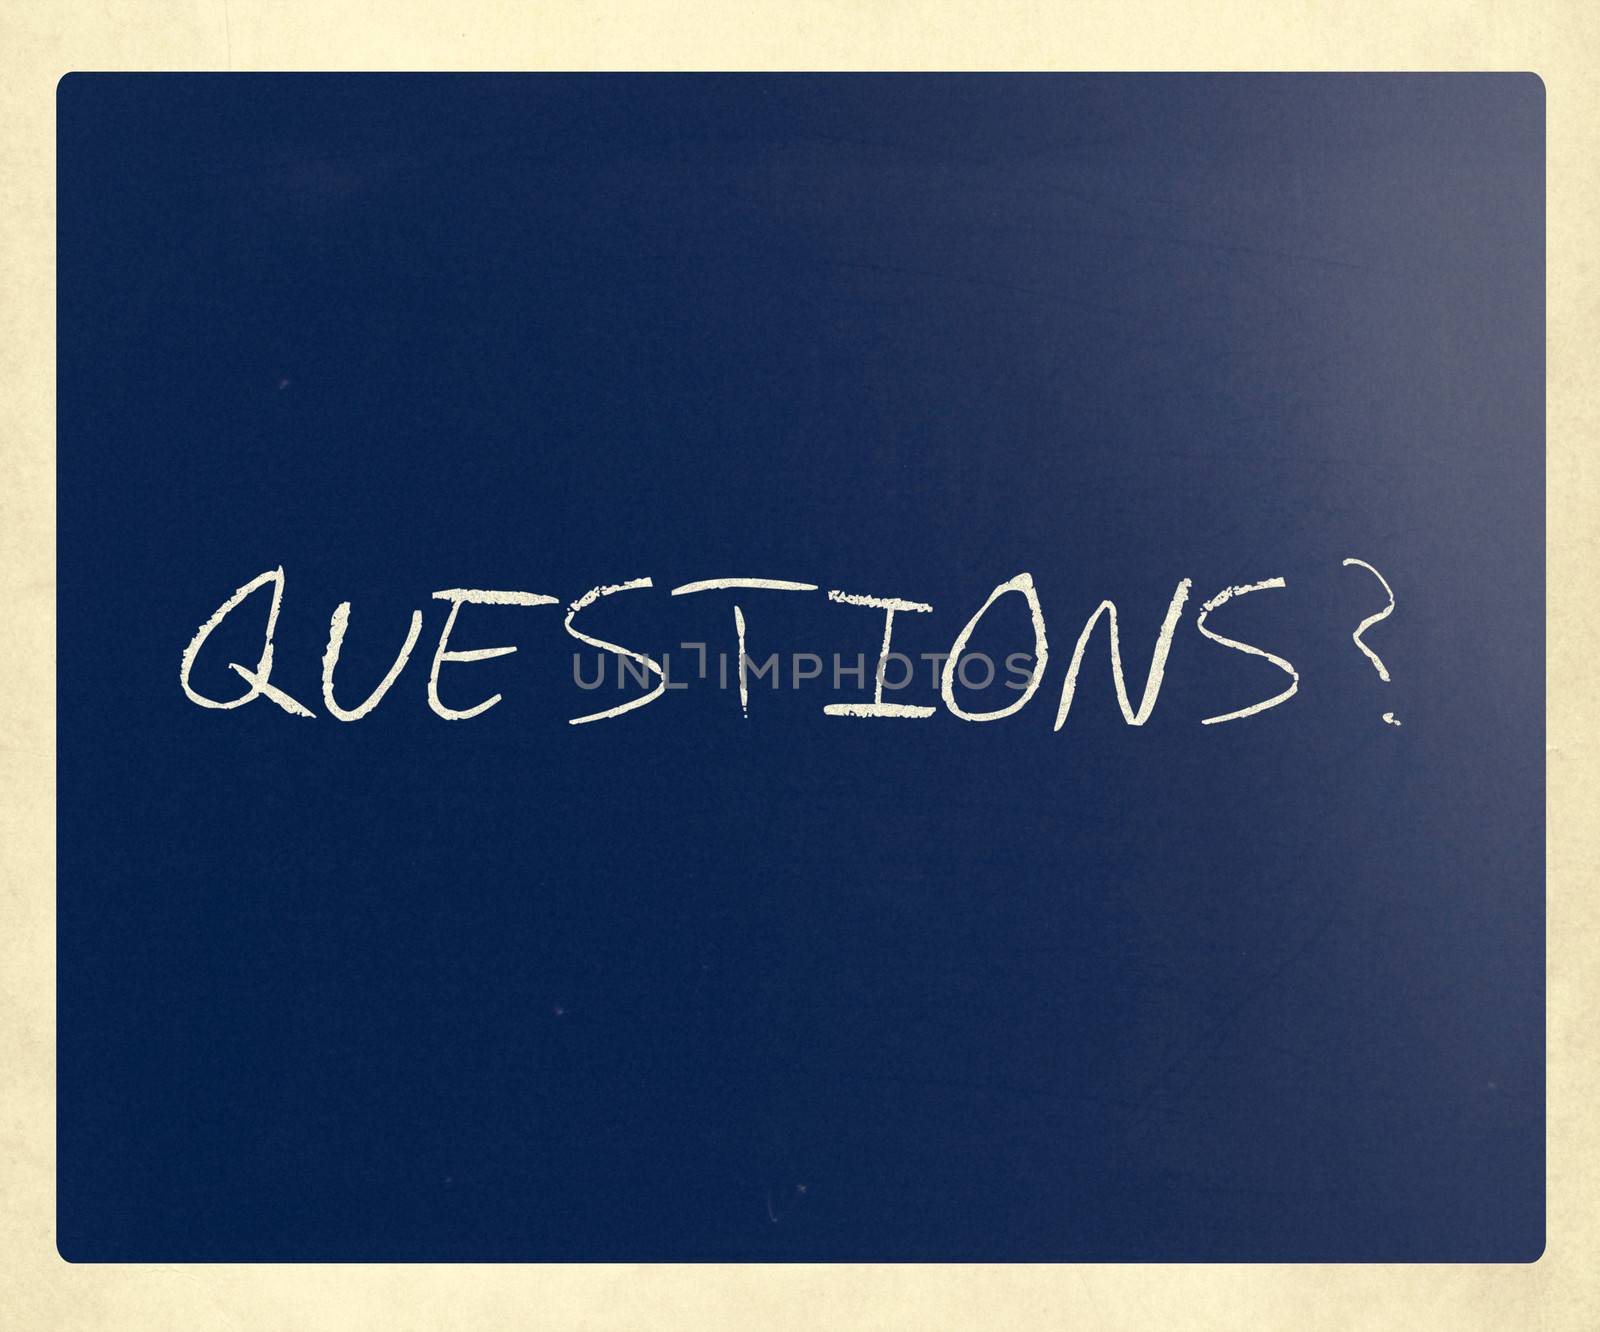 "Questions?" handwritten with white chalk on a blackboard.